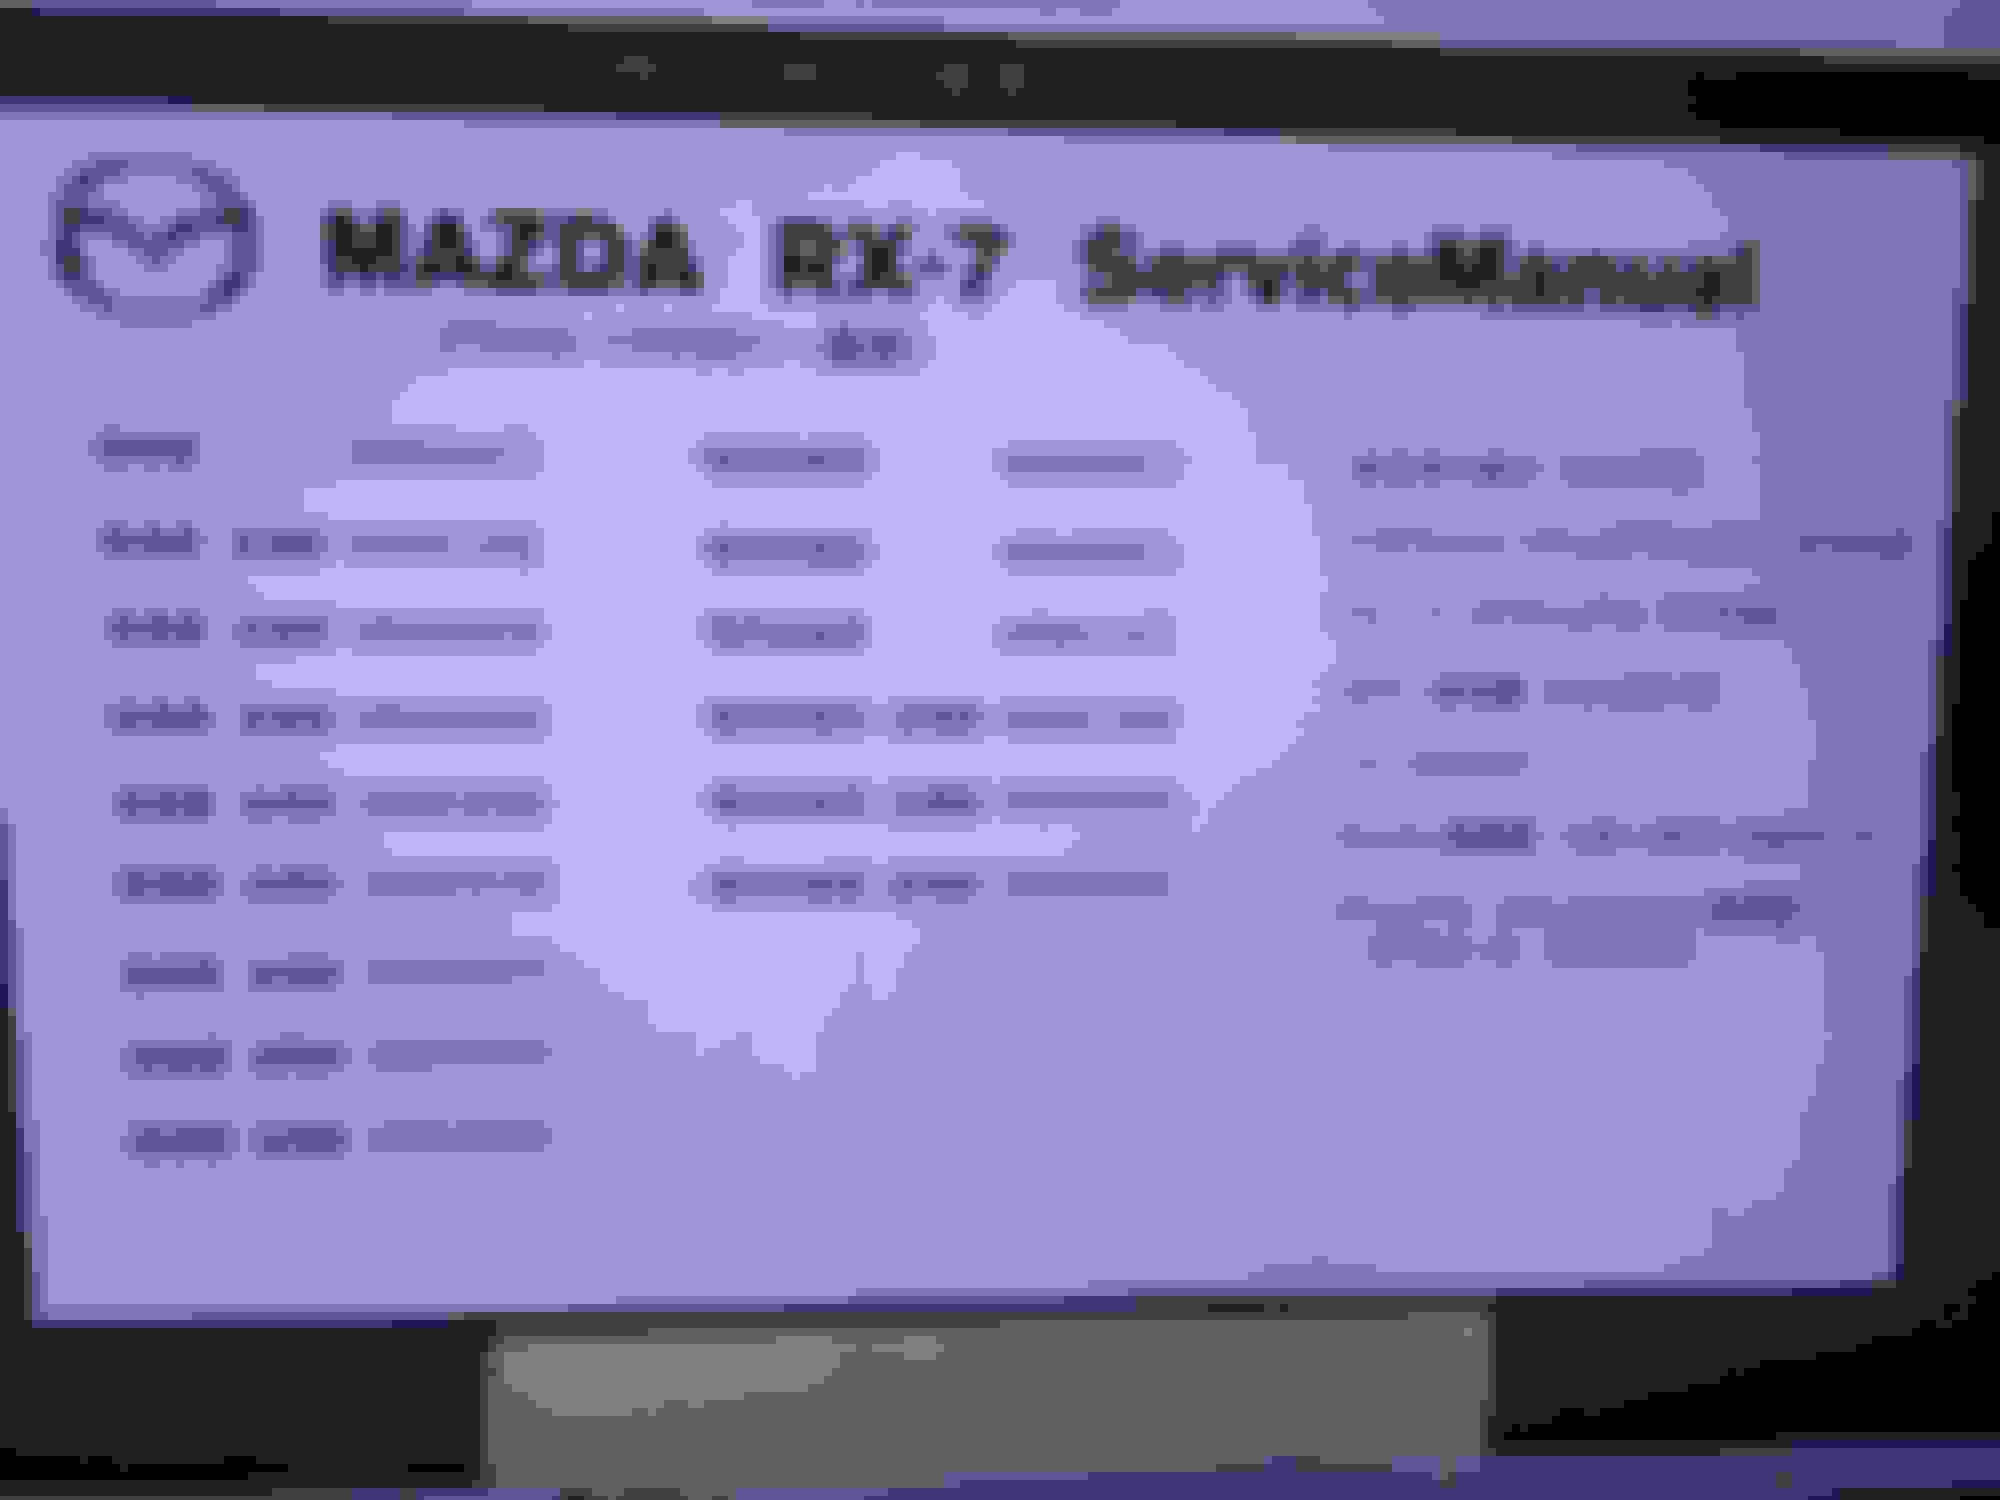 MEWANT---for Mazda MX-5 MX5 Miata NB RX-7 RX7 1999-2002 Car Steering Wheel  Cover Installations 